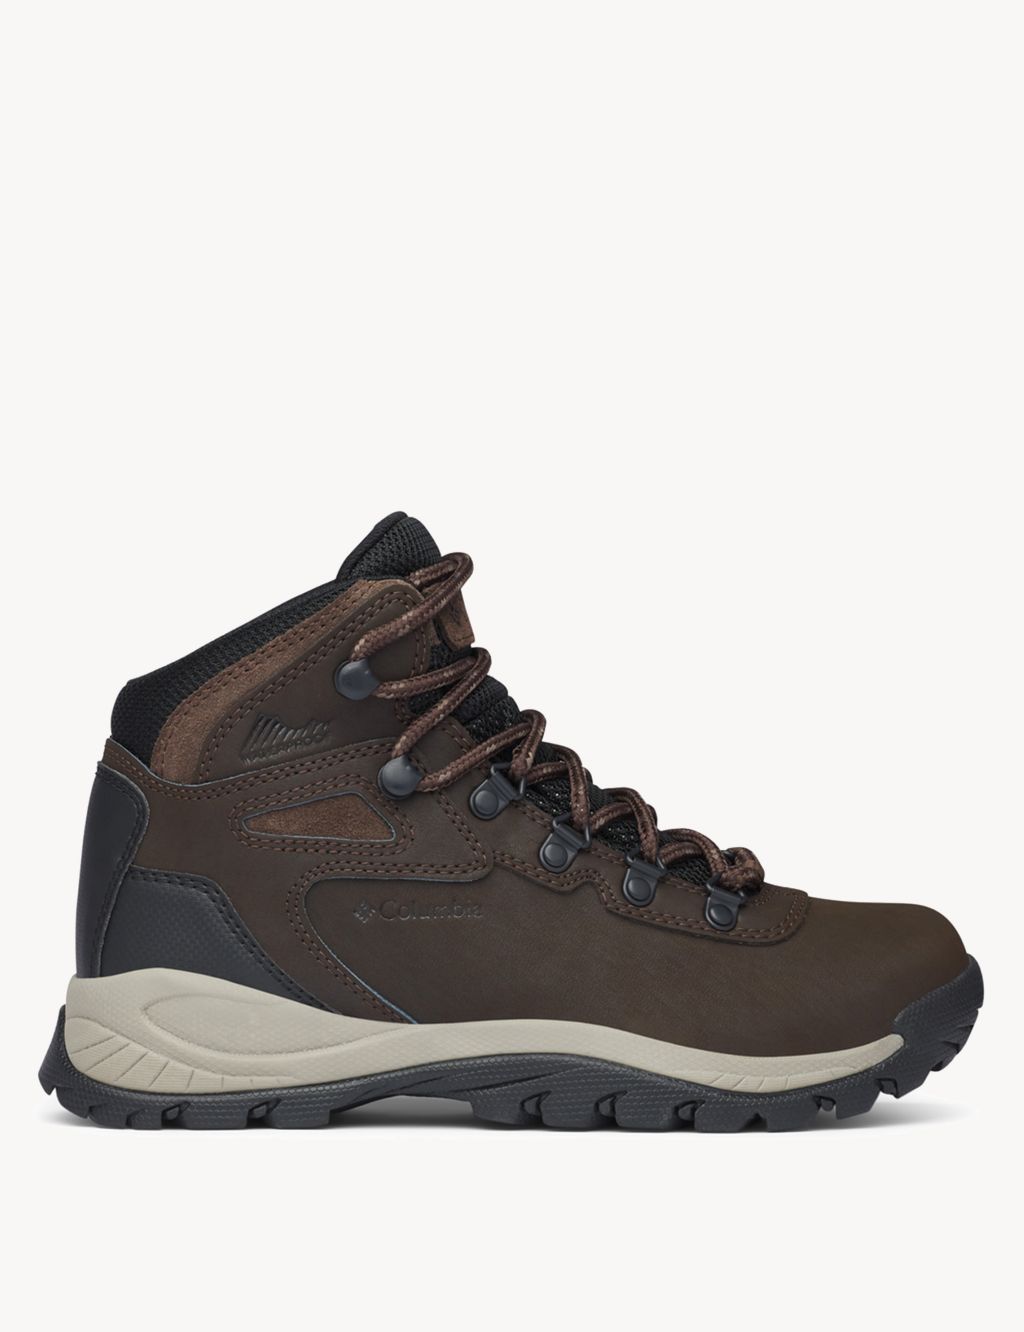 Newton Ridge Plus Leather Walking Boots image 1